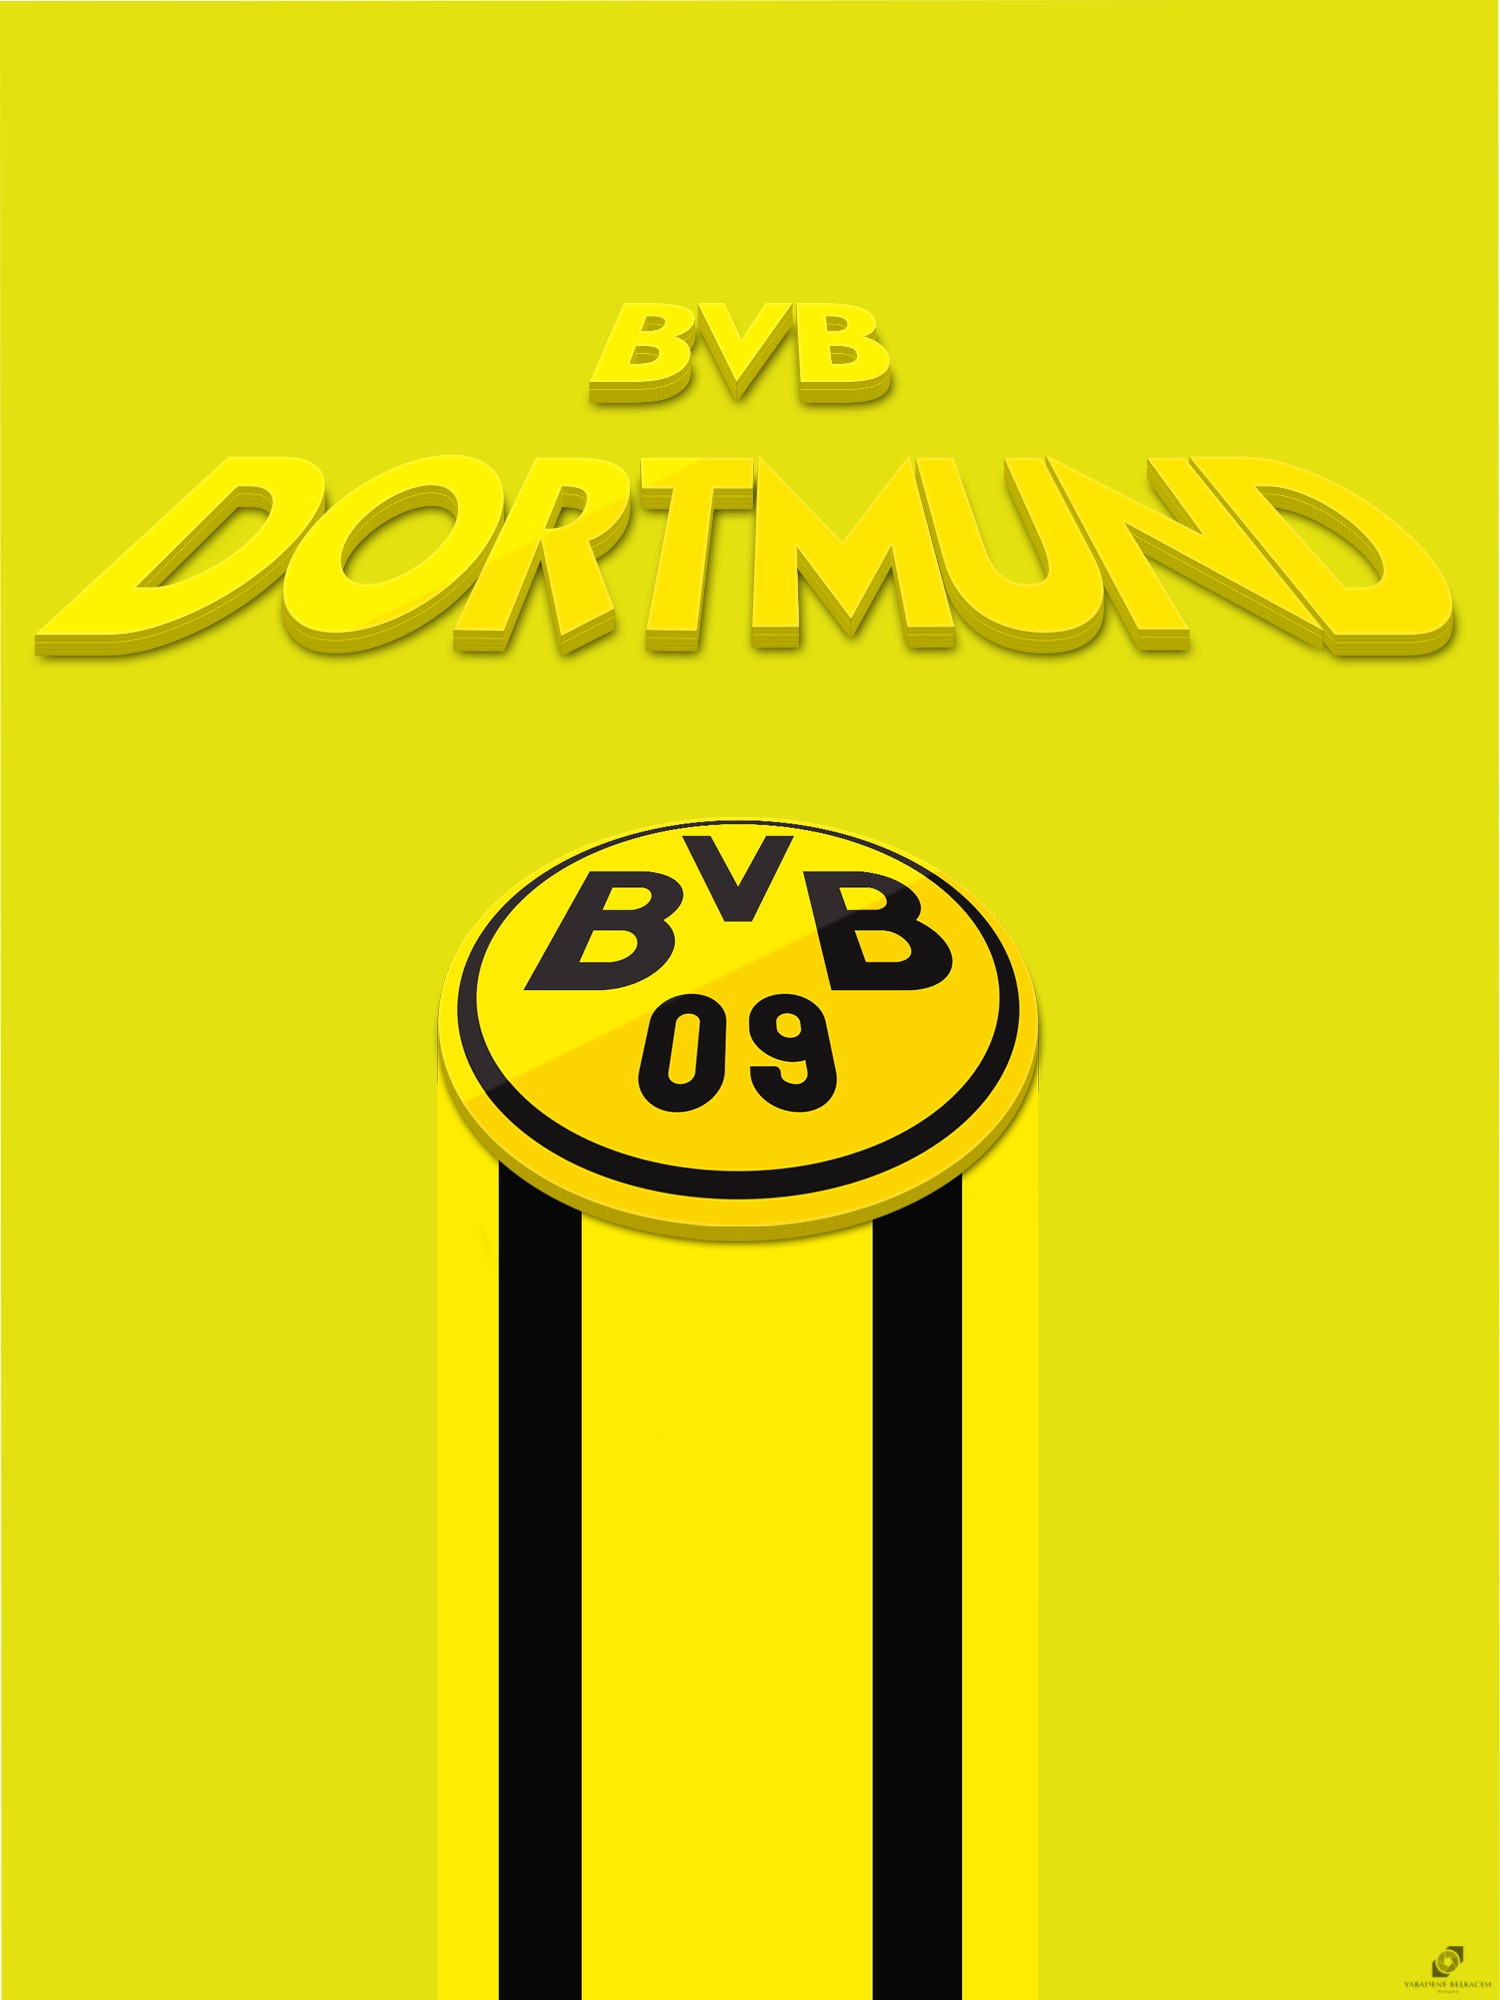 General 1500x2000 BVB Borussia Dortmund Germany soccer Bundesliga sport logo numbers yellow background simple background portrait display digital art